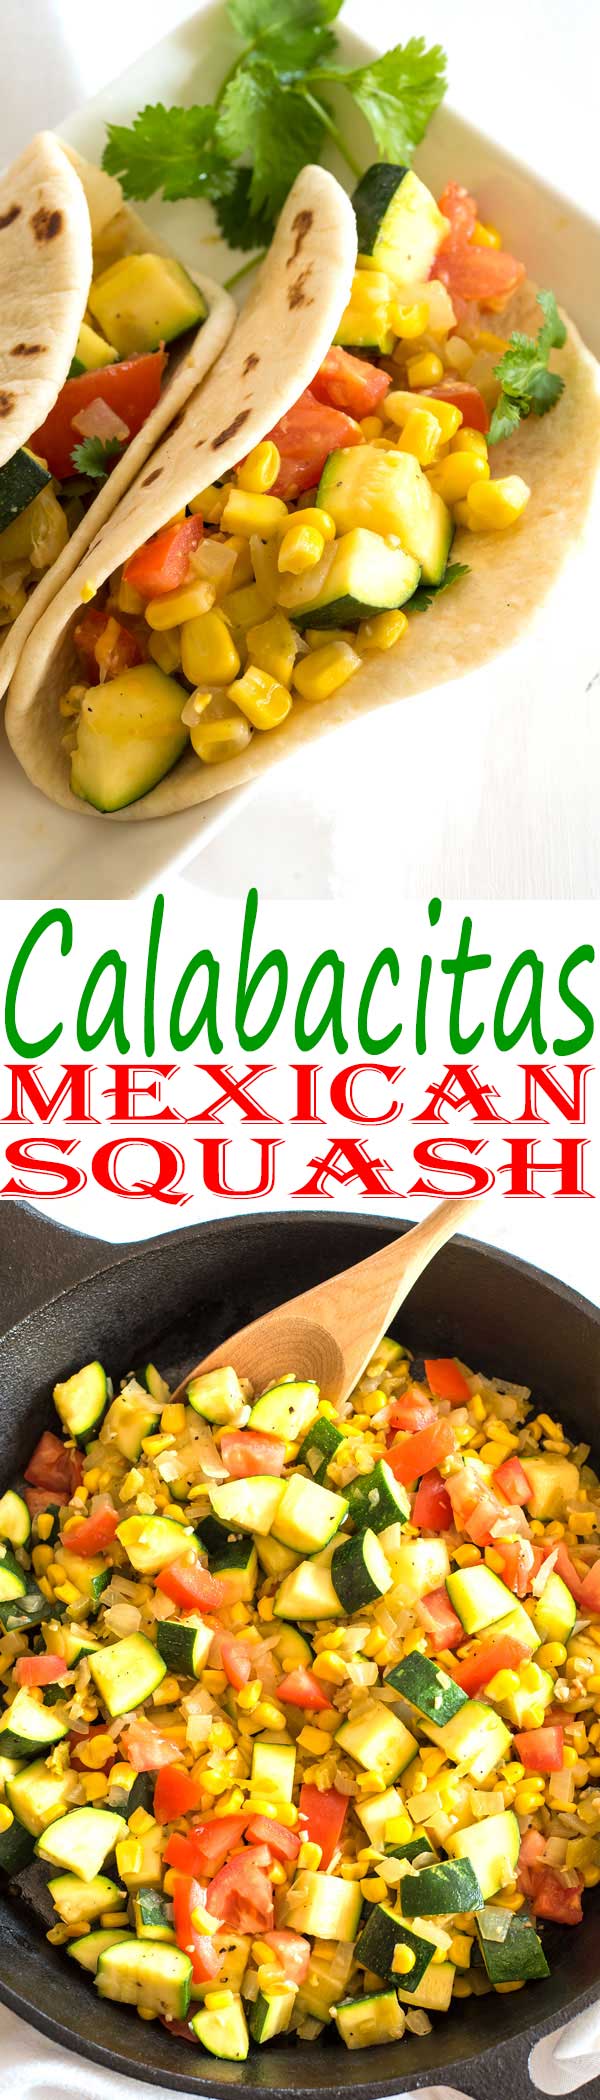 Easy recipe for Mexican zucchini squash with cheese - a great side dish or taco filling! Calabacitas Mexicanas - receta de calabacitas con queso. 